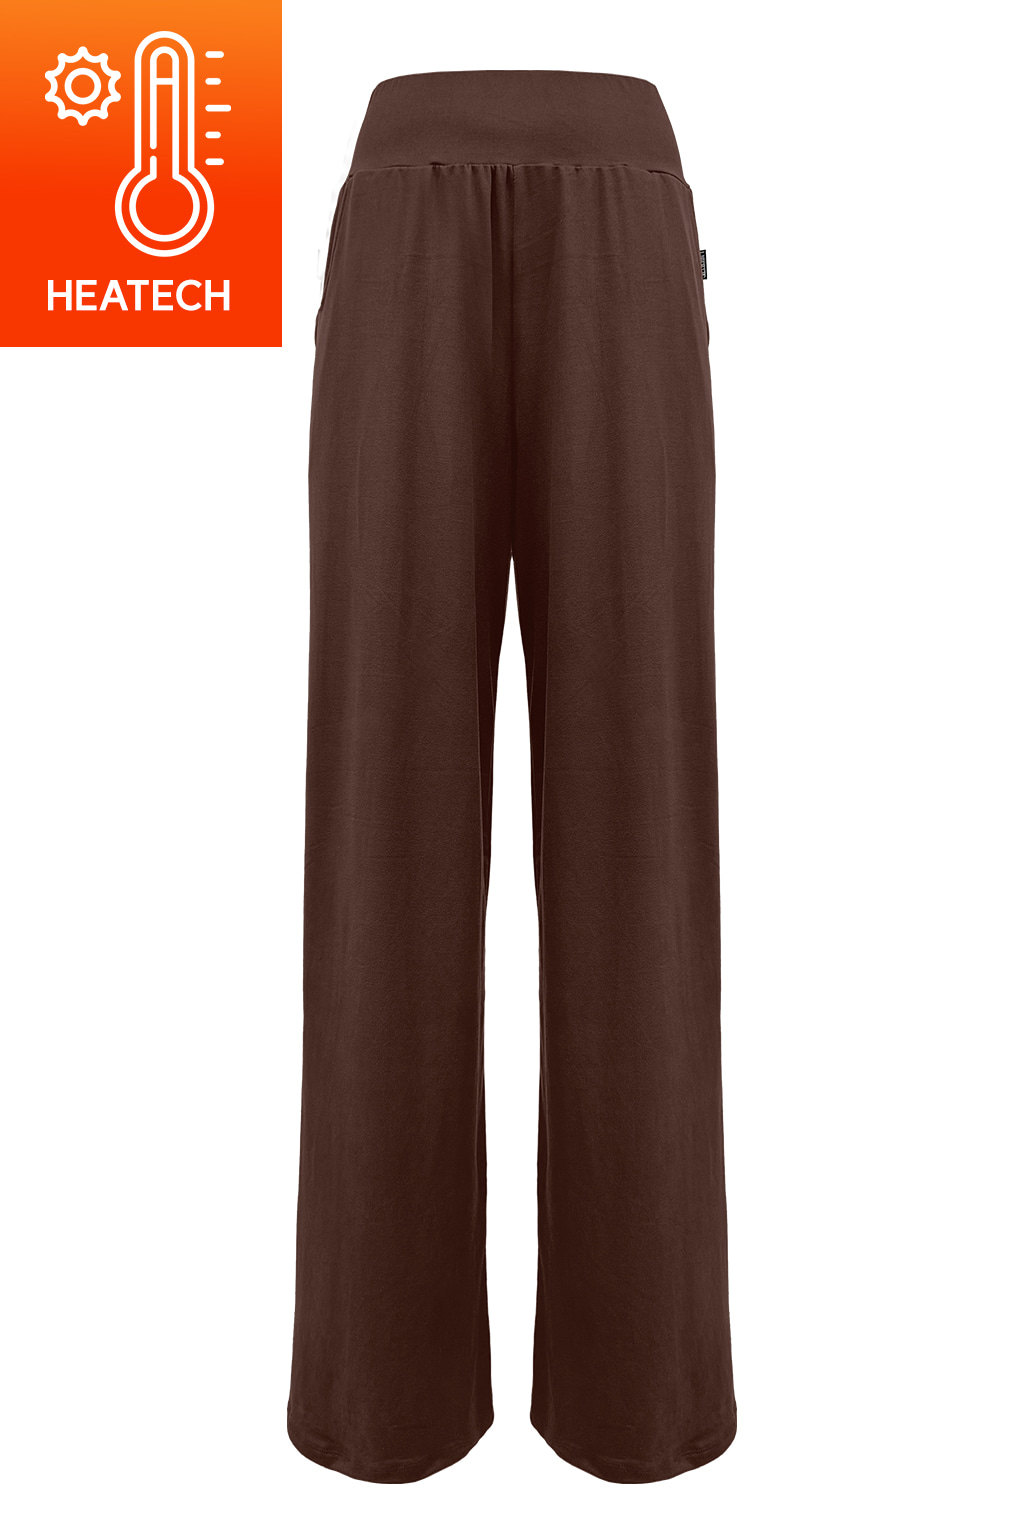 [Hittech] Ant waist banding wide pants Dark chocolate